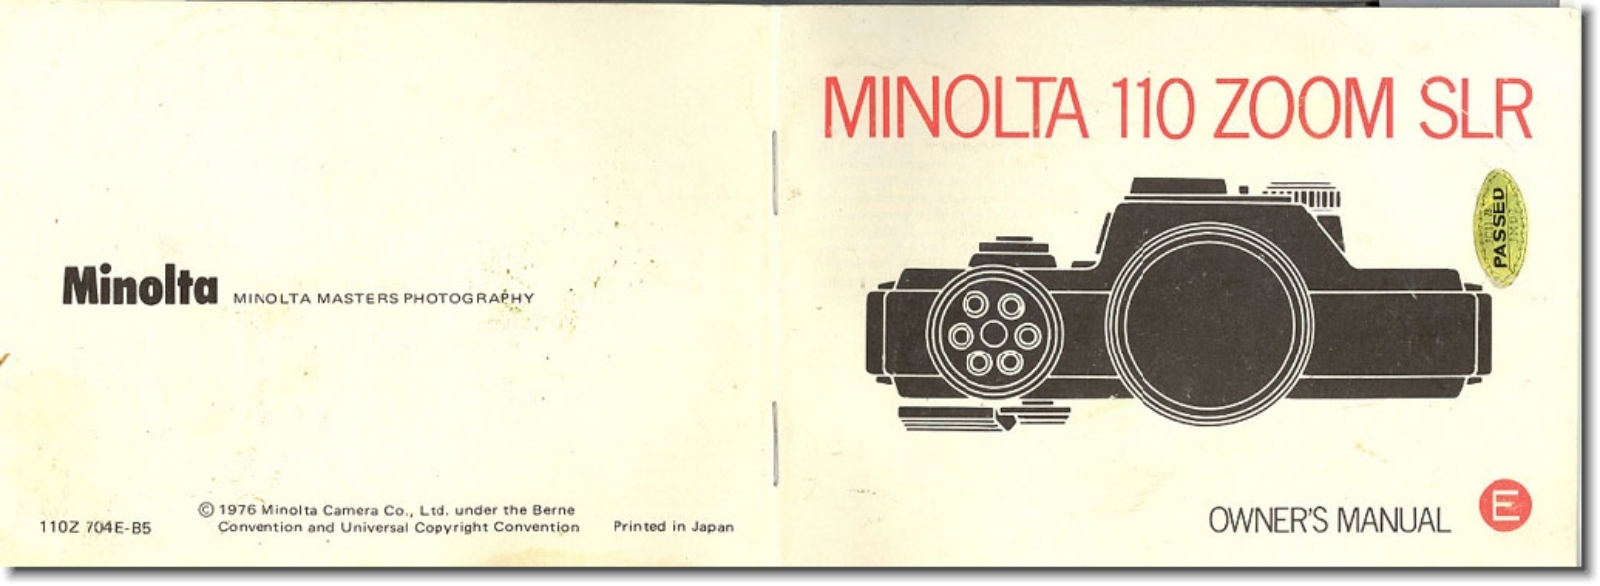 MINOLTA 110 Zoom SLR Owner's Manual